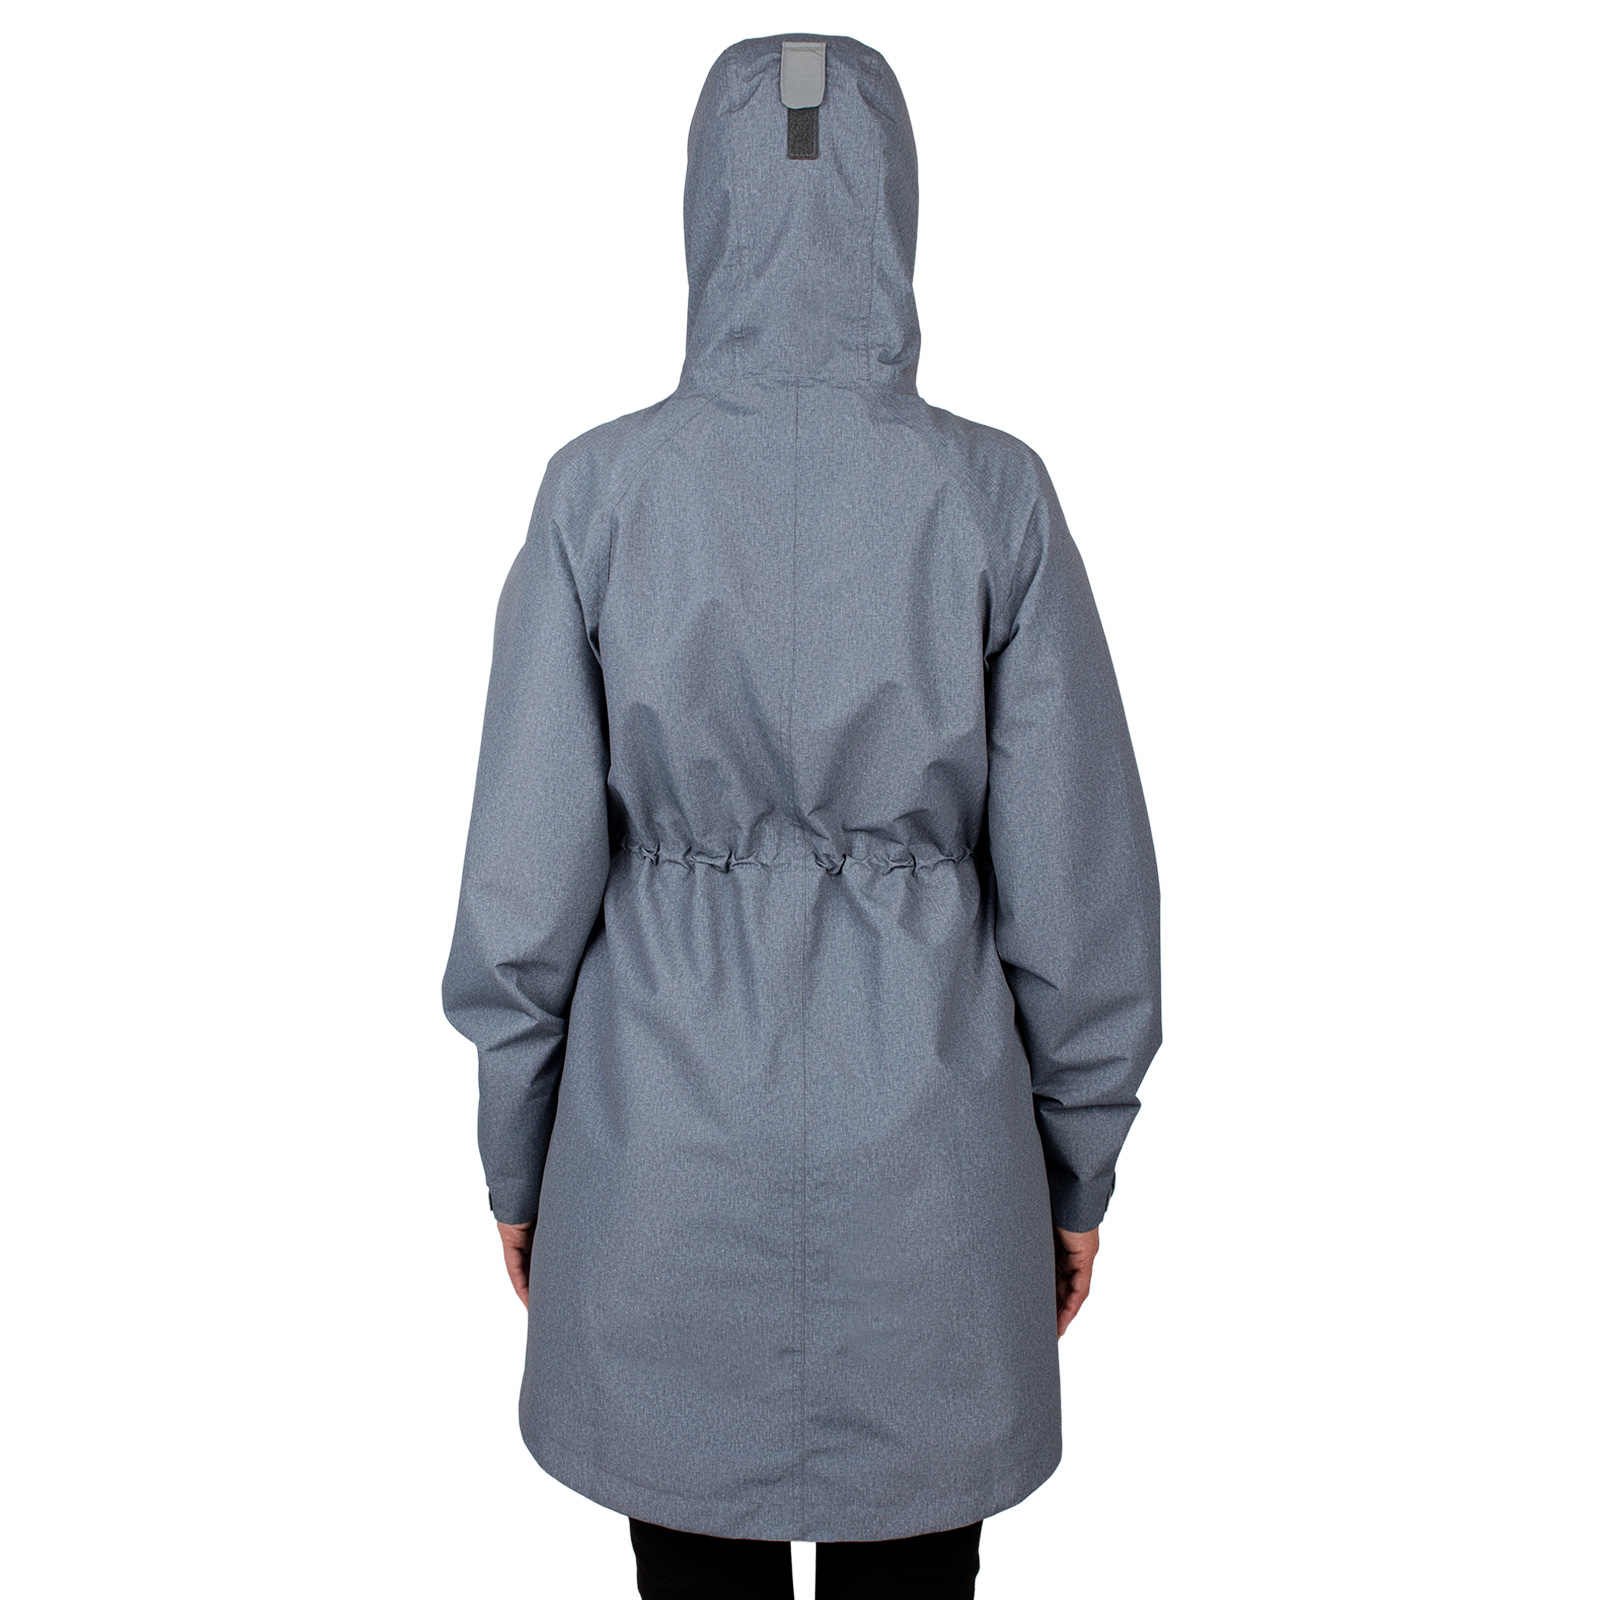 JAN & JUL Waterproof Rain-Coat for Women Thigh-Length Jacket (Heather Grey, Size L) - image 2 of 7